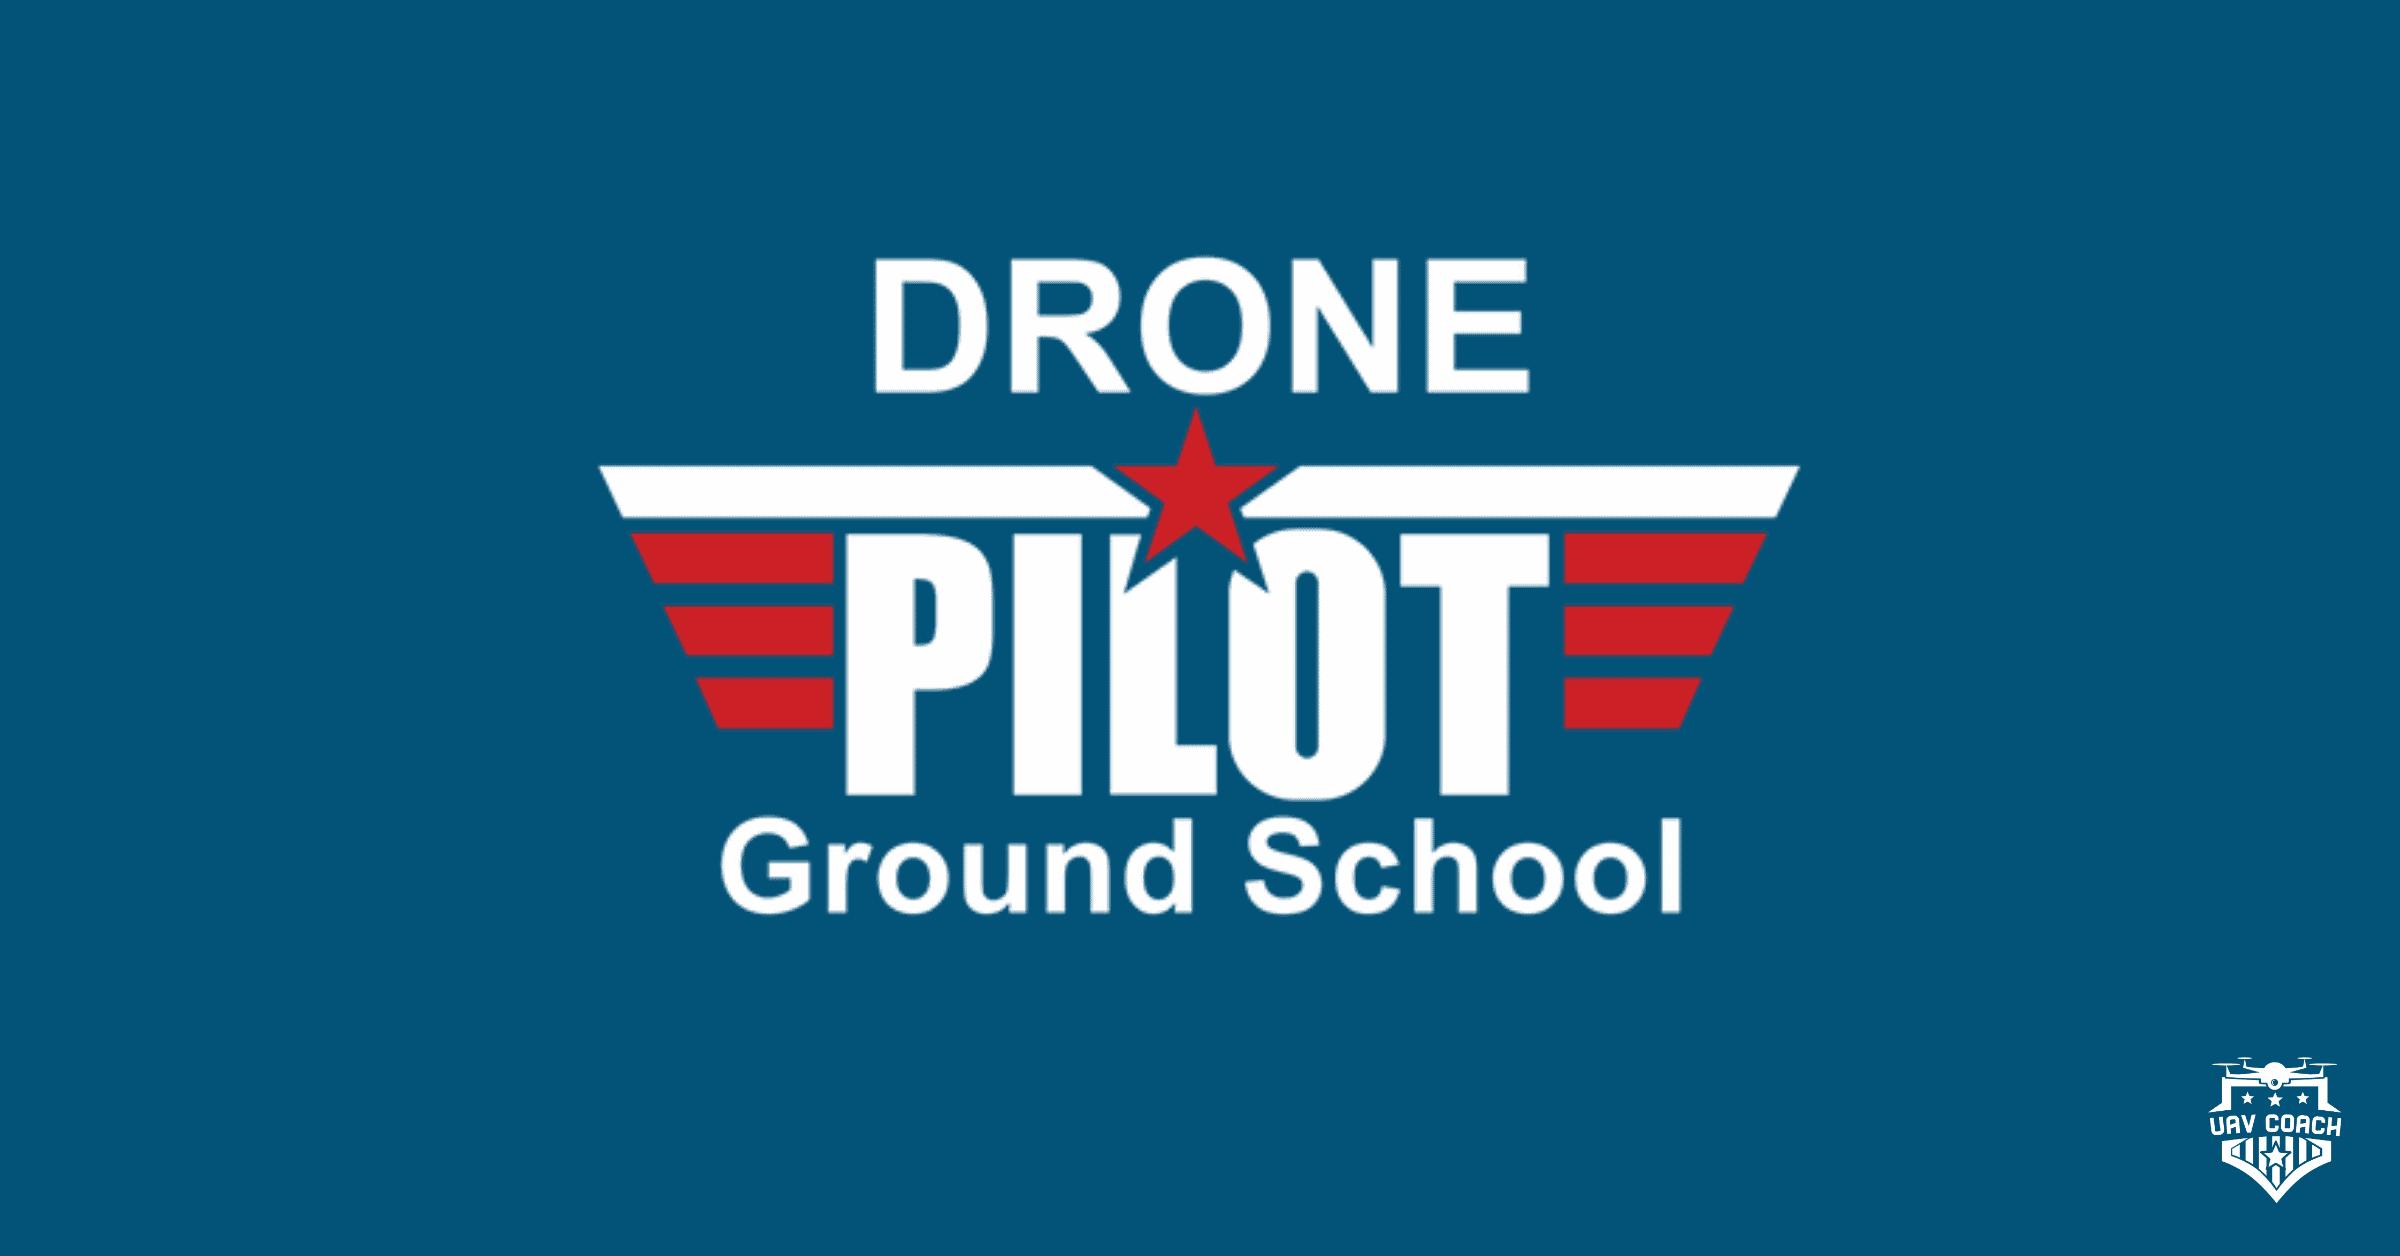 Drone Pilot Ground School: Get Started